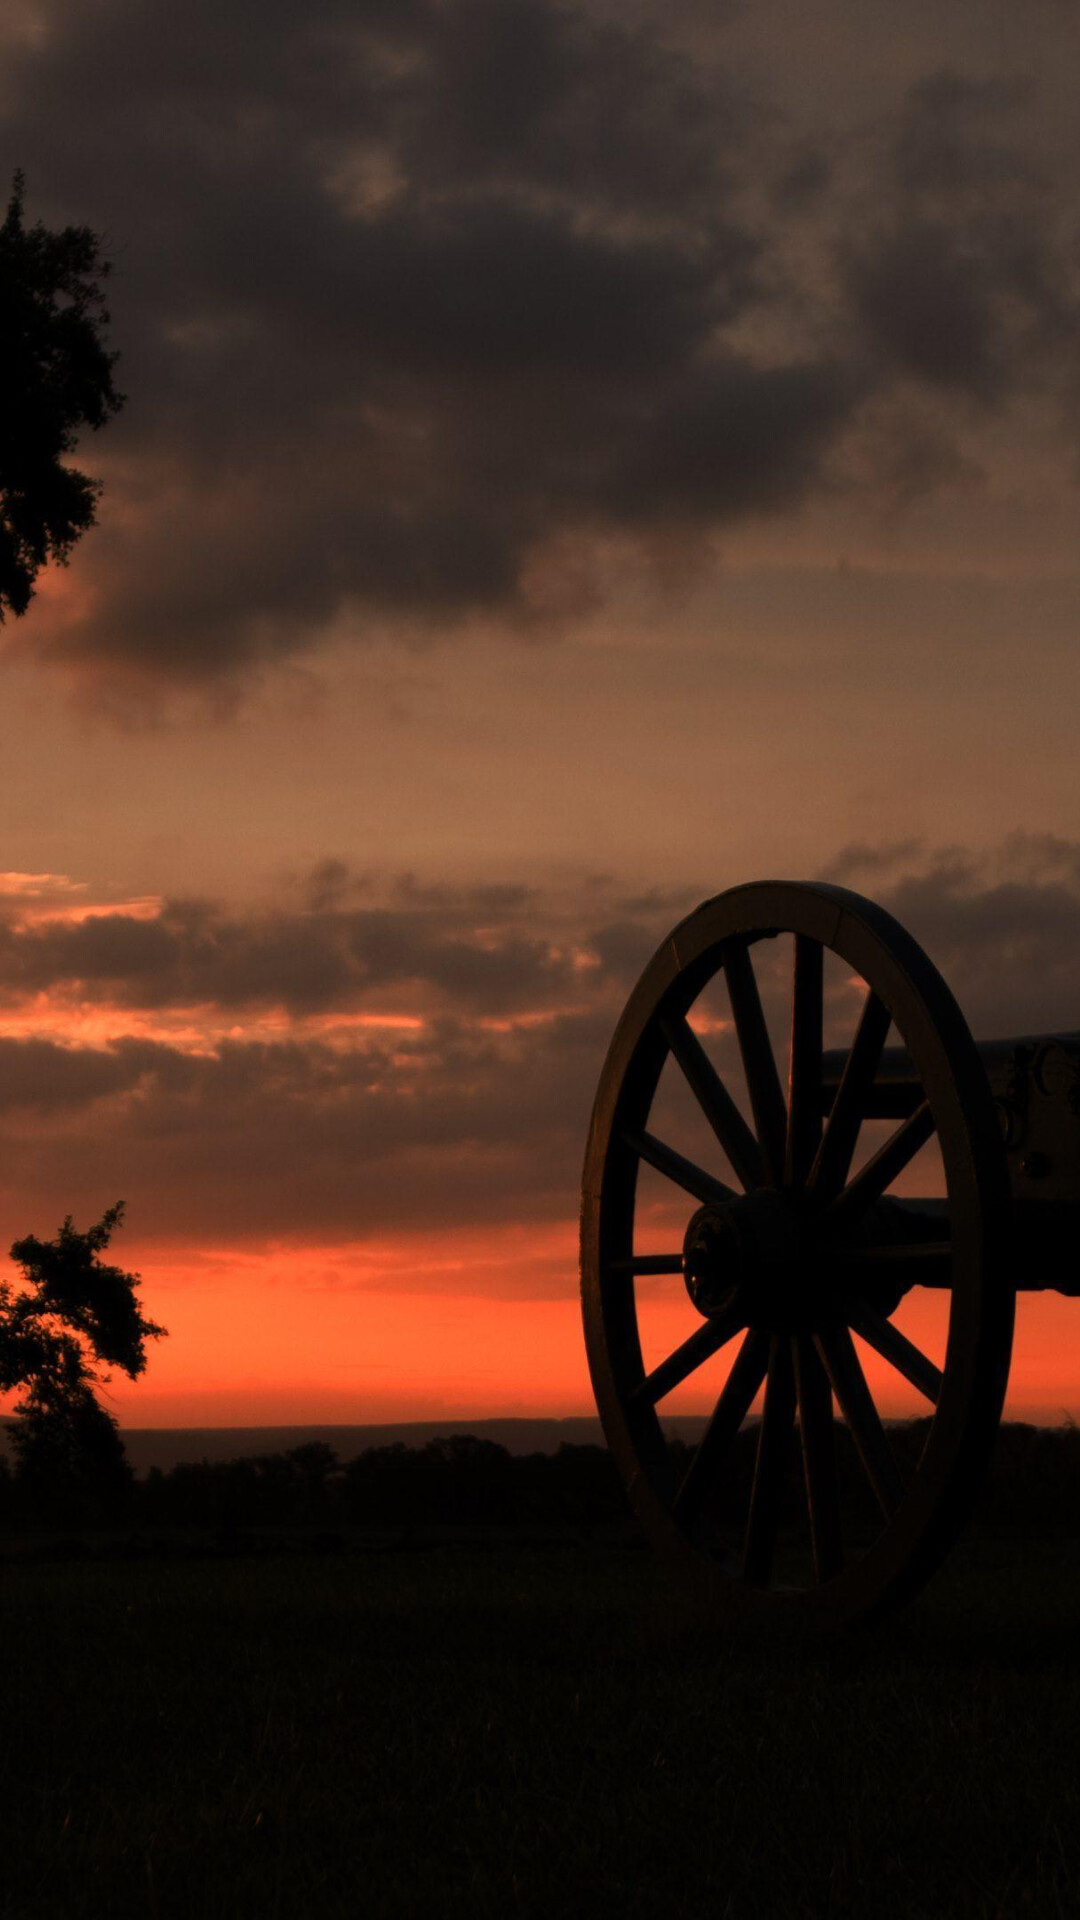 Gettysburg: Field artillery of the American Civil War during sunset time, The memorial field in Pennsylvania National Park. 1080x1920 Full HD Wallpaper.